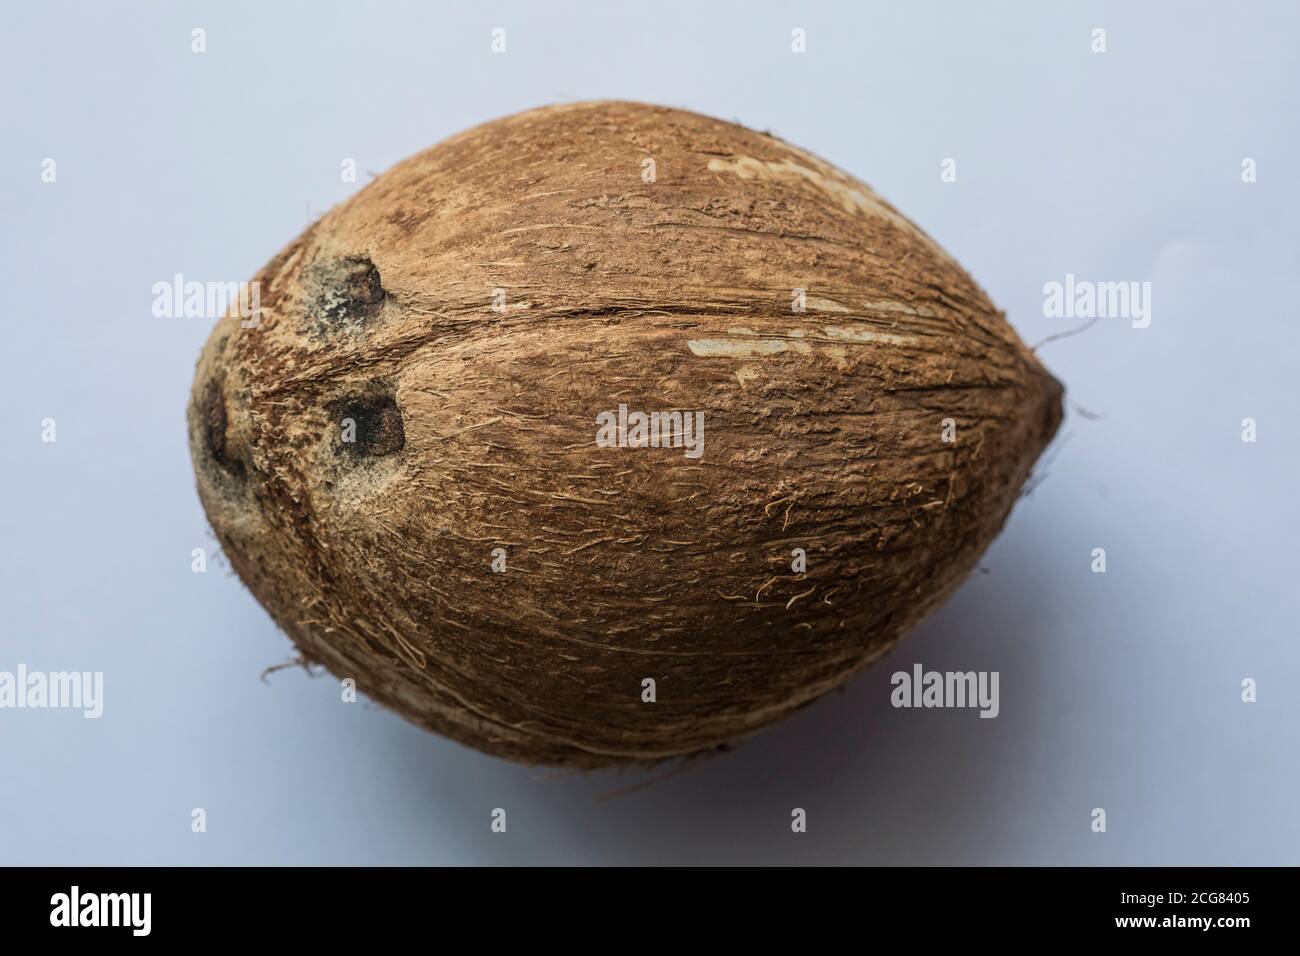 One whole raw coconut isolated on white background. Stock Photo